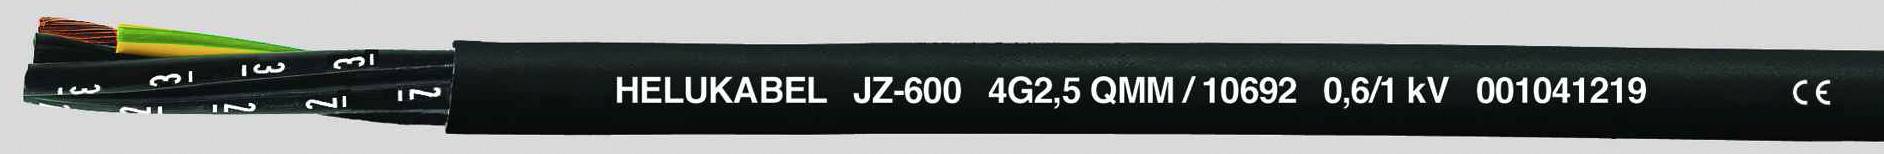 HELUKABEL JZ-600 Steuerleitung 7 G 1 mm² Schwarz 10624-500 500 m